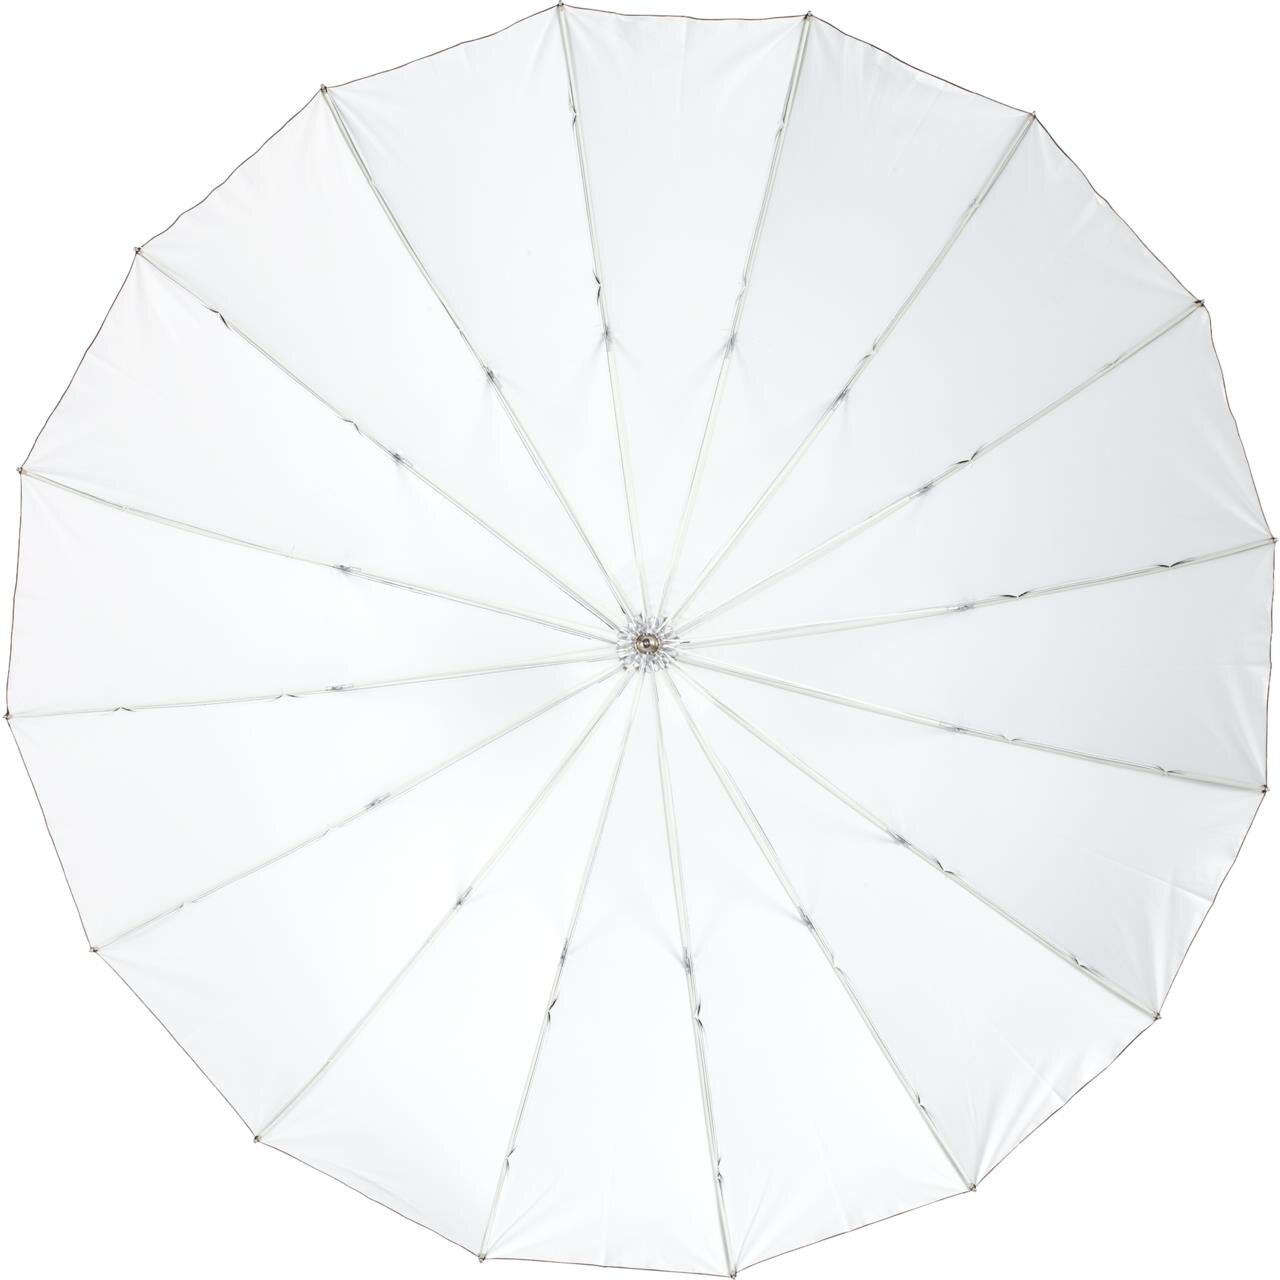 100983_b_profoto-umbrella-deep-white-s-front_productimage.png.jpeg